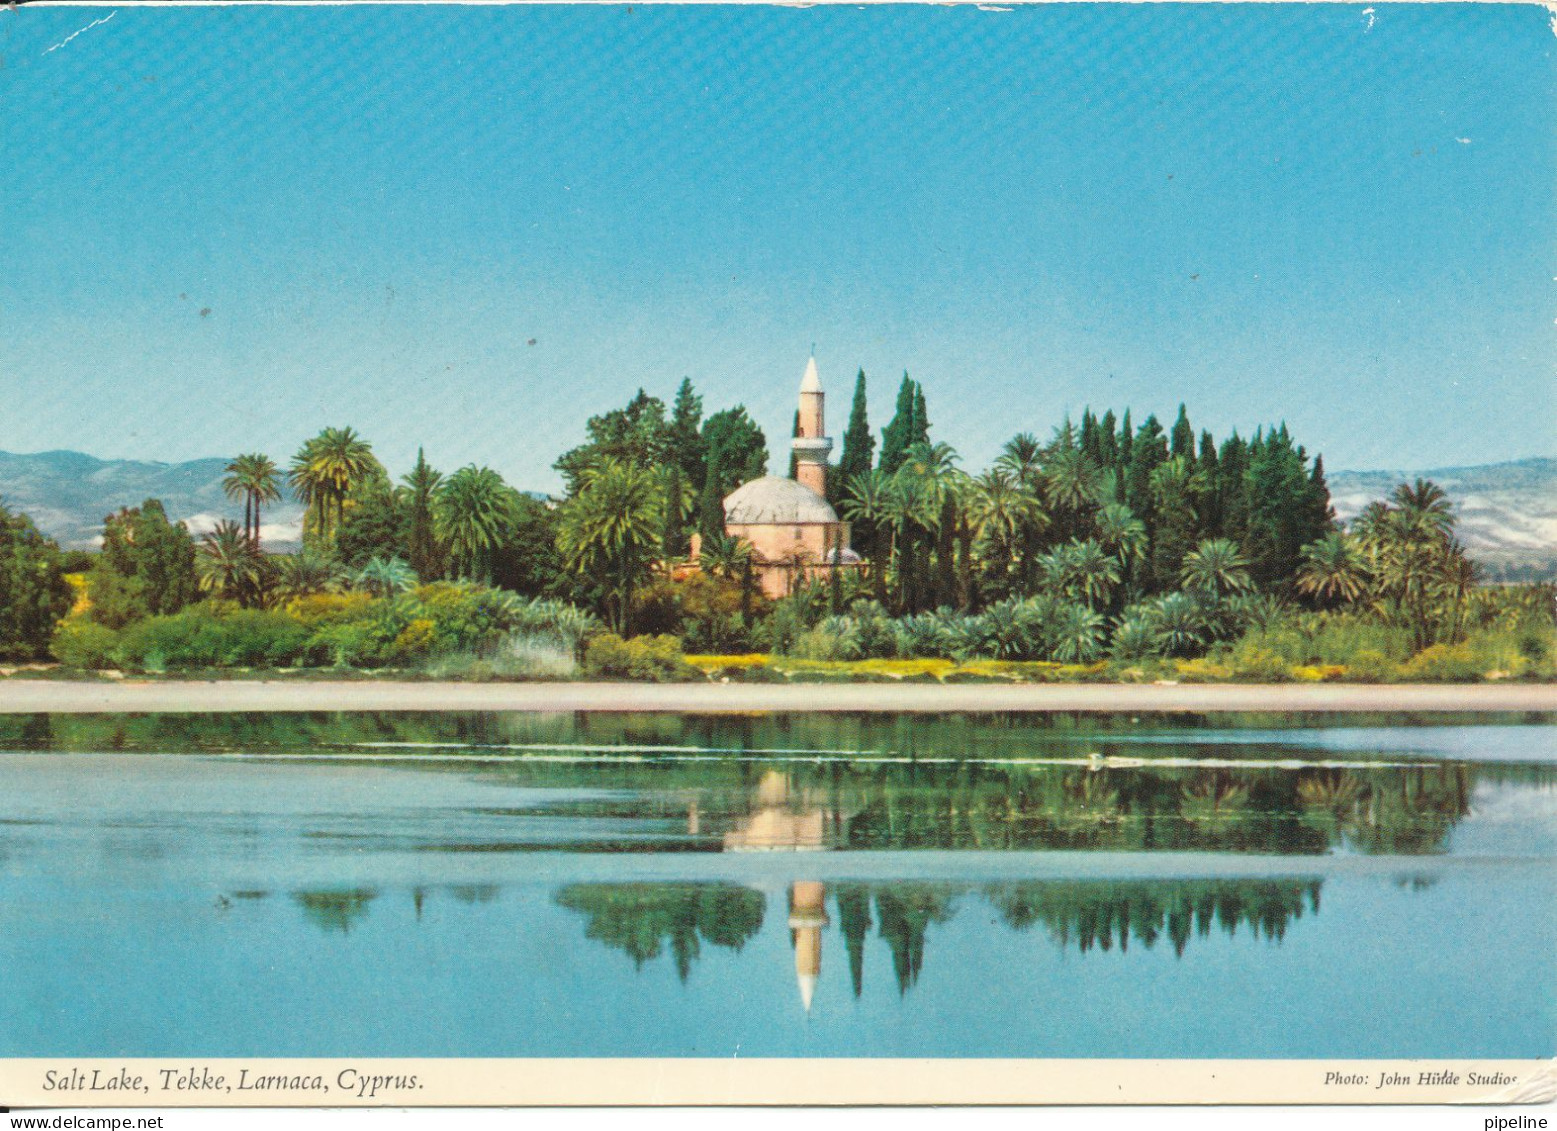 Cyprus  Postcard Sent To Germany 3-10-1979 ( Salt Lake Tekke Larnaca) - Chypre